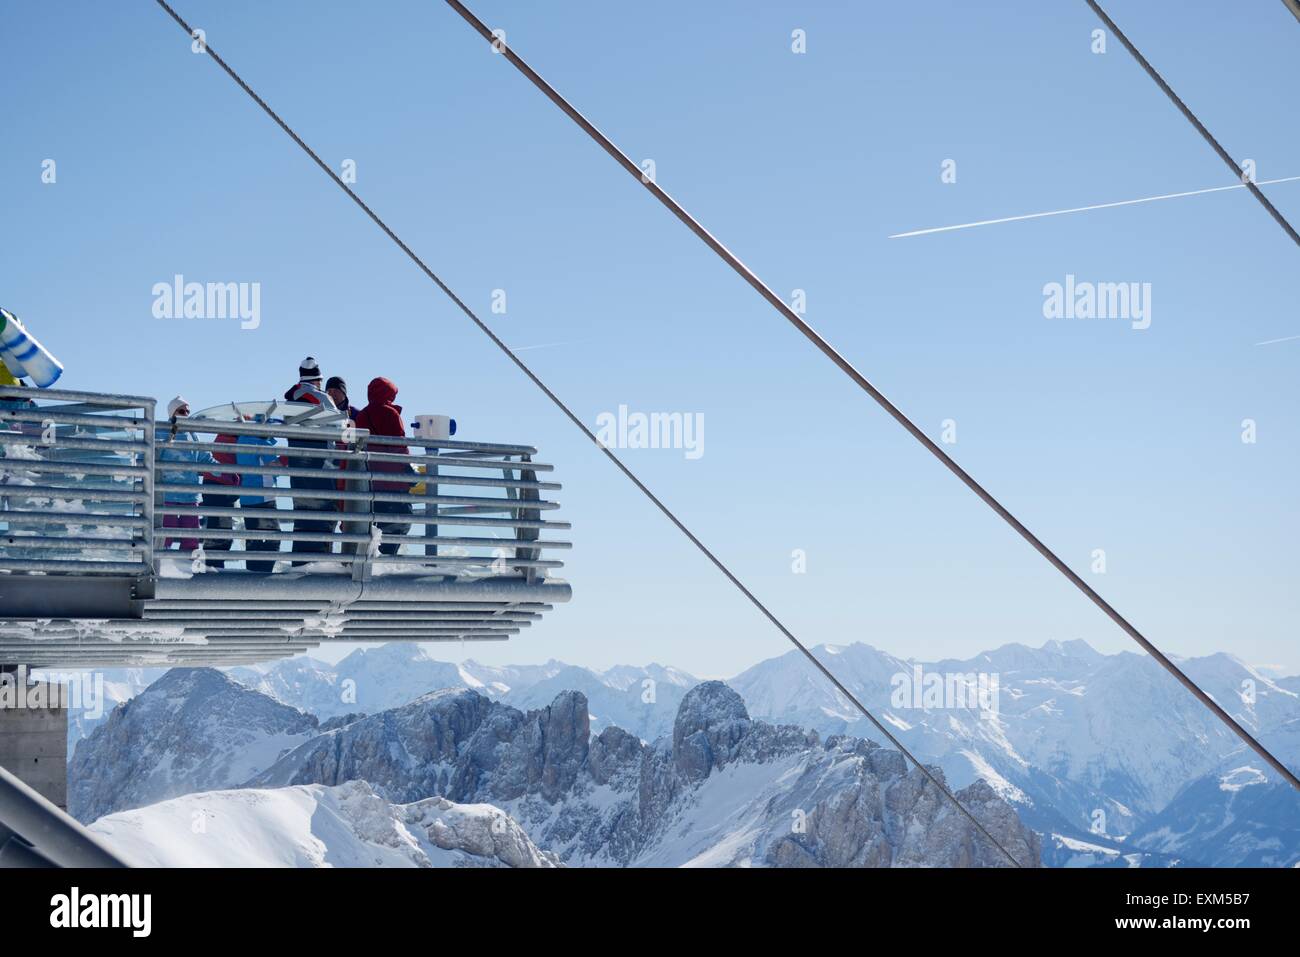 Sky walk, suspended platform with glass floor, The Dachstein glacier- UNESCO World Natural Heritage,Styria,Austria,Alps,Skiing Stock Photo